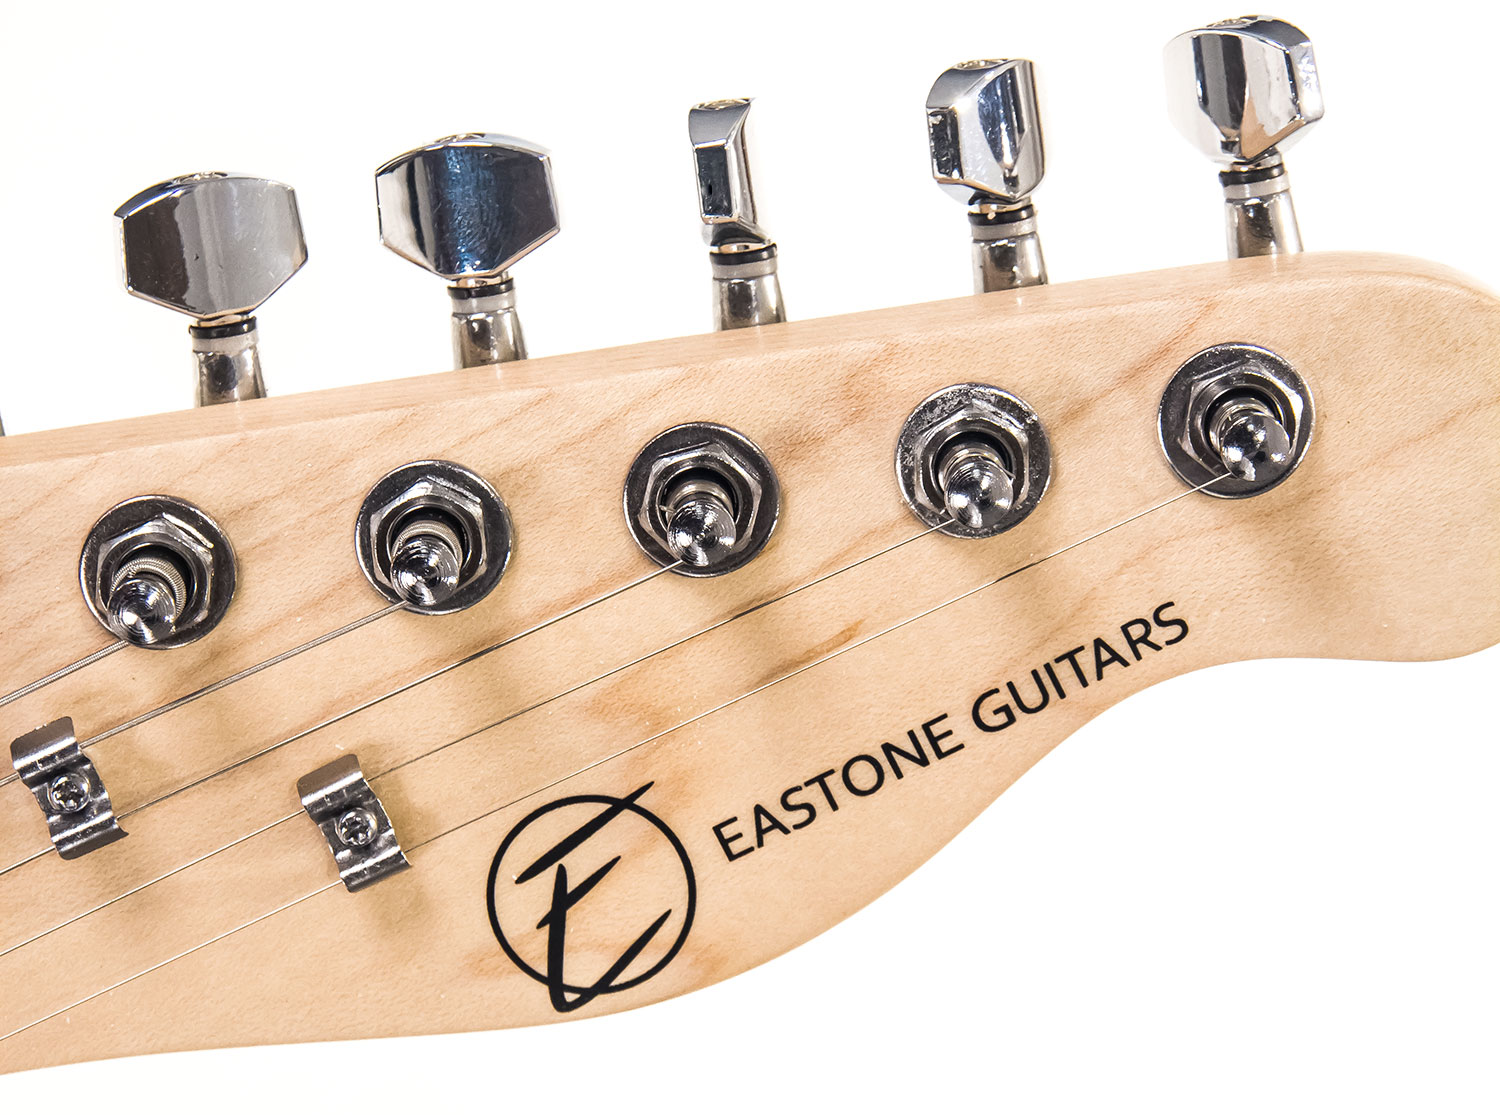 Eastone Tl70 Ss Ht Pur - Metallic Light Blue - Tel shape electric guitar - Variation 3